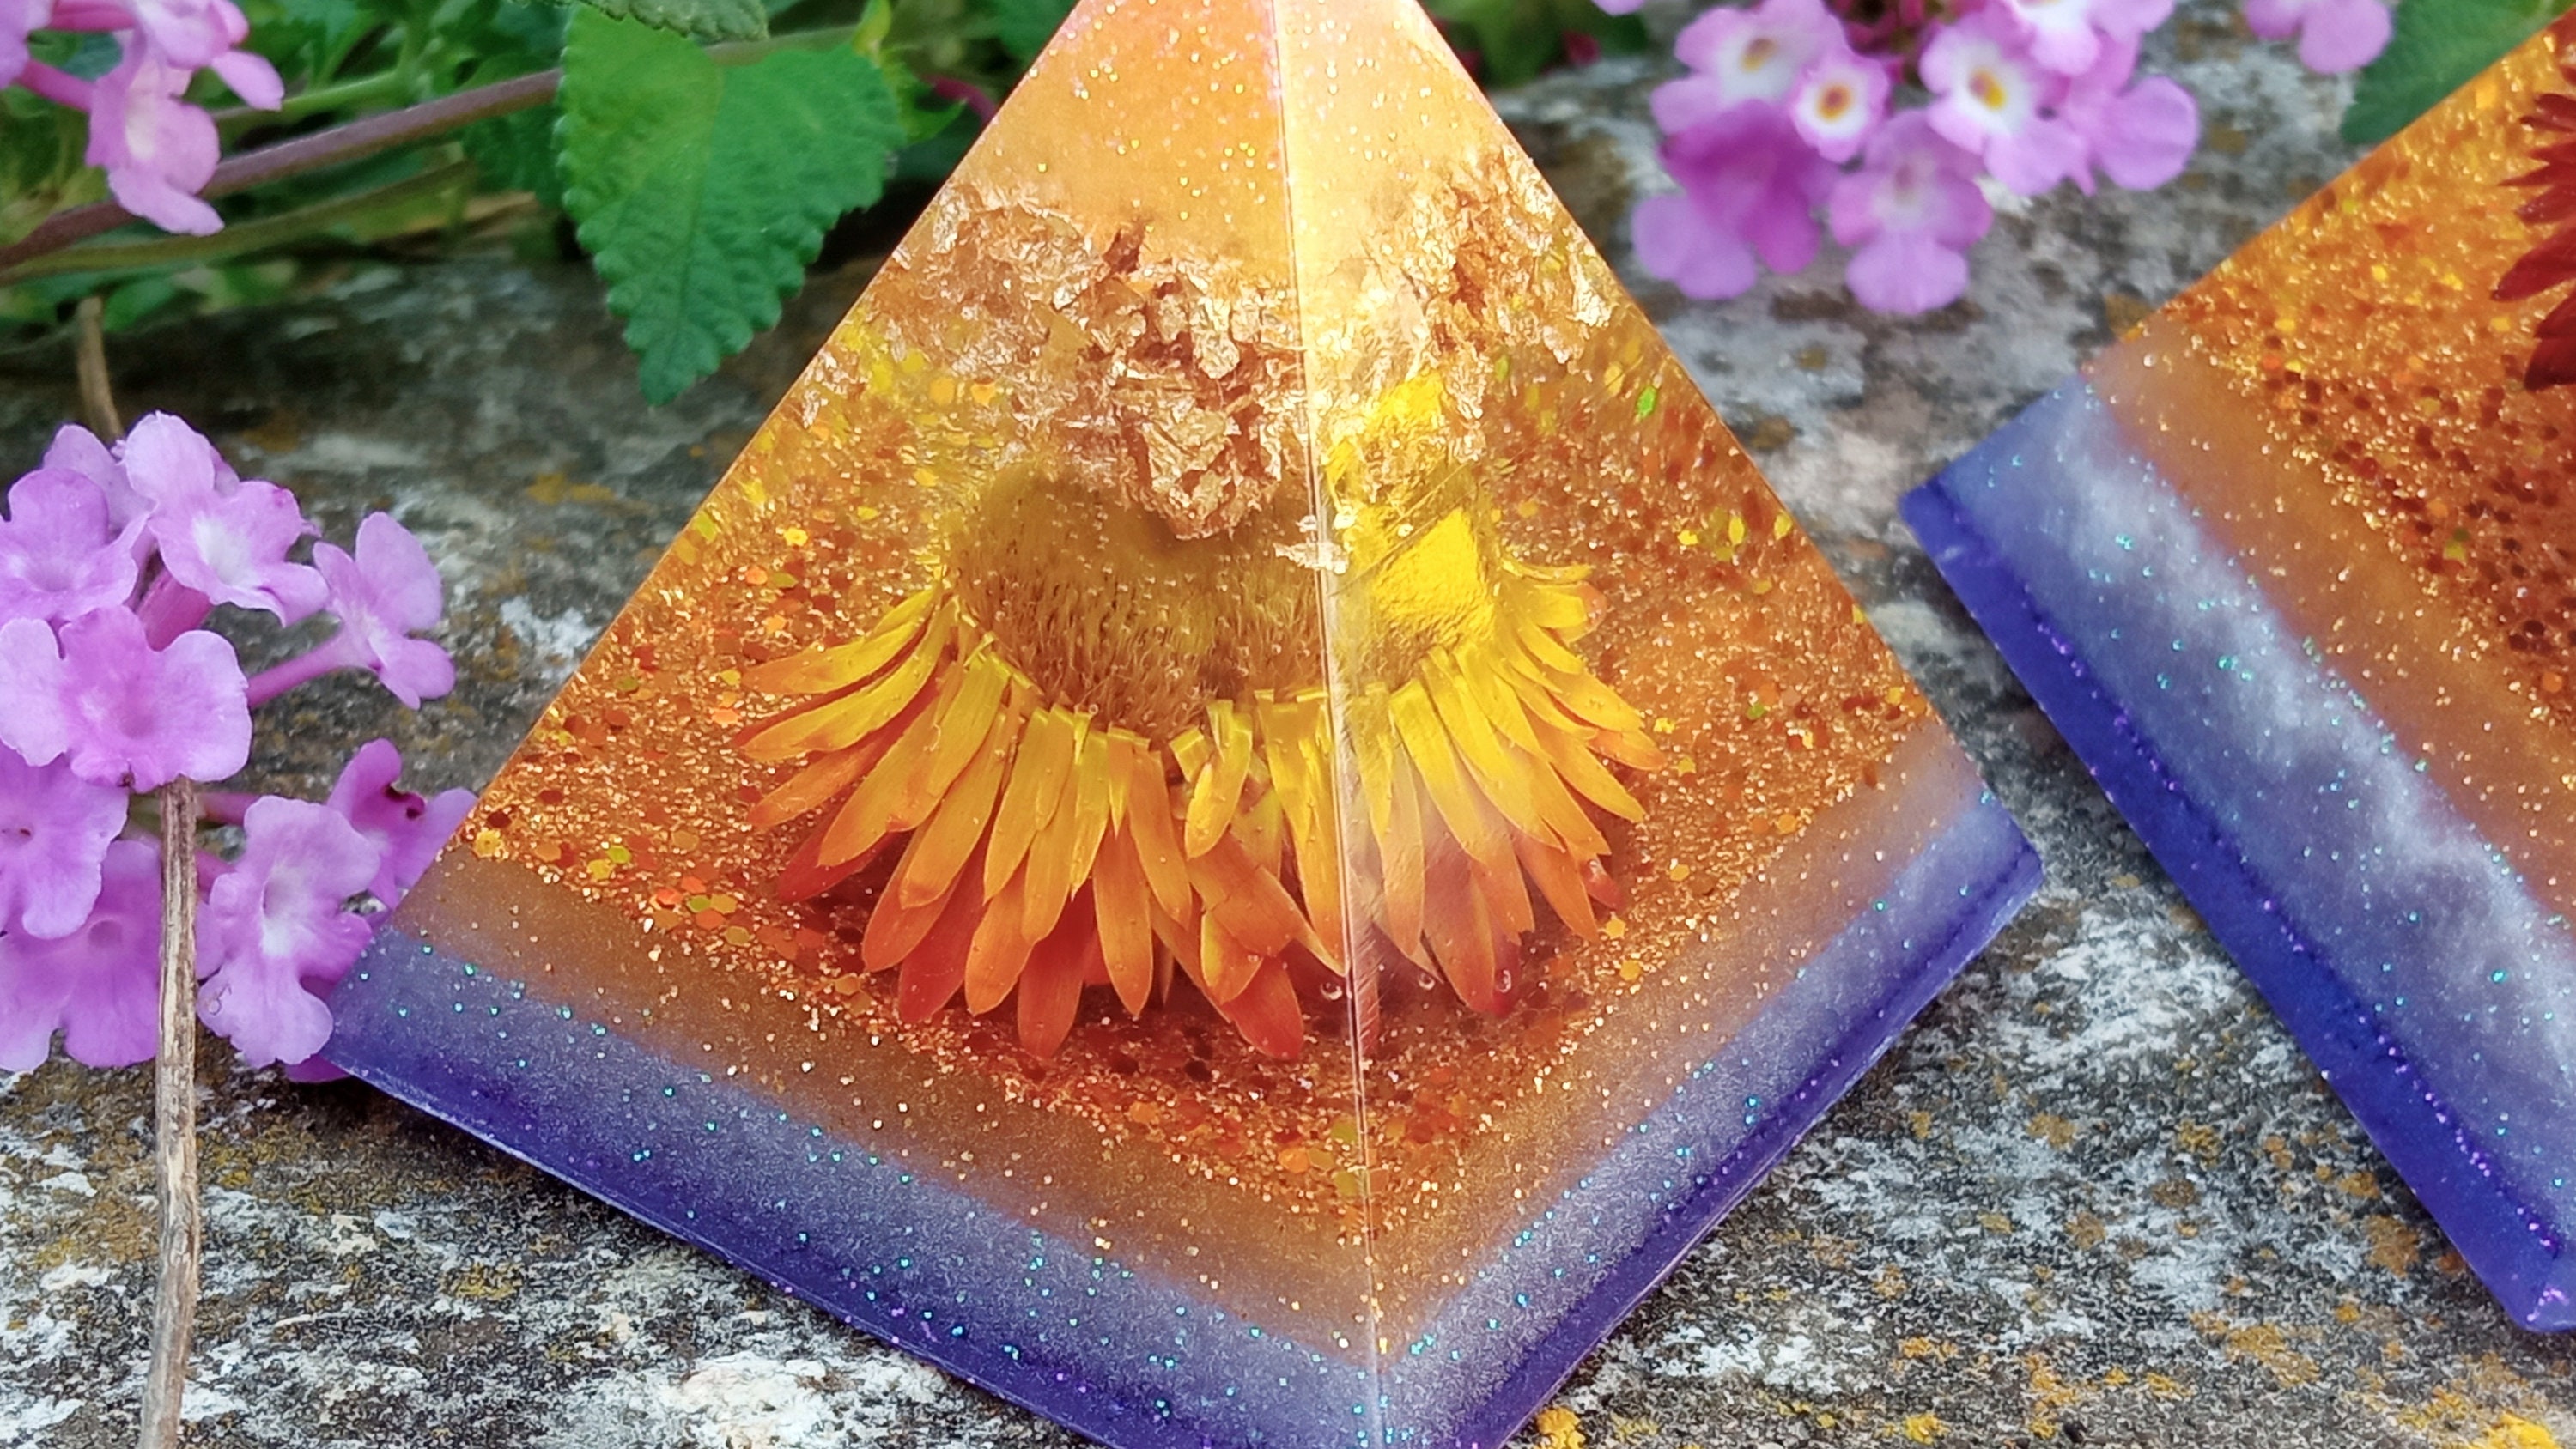 Meditation Resin pyramid real flowers decor, spiritual gift